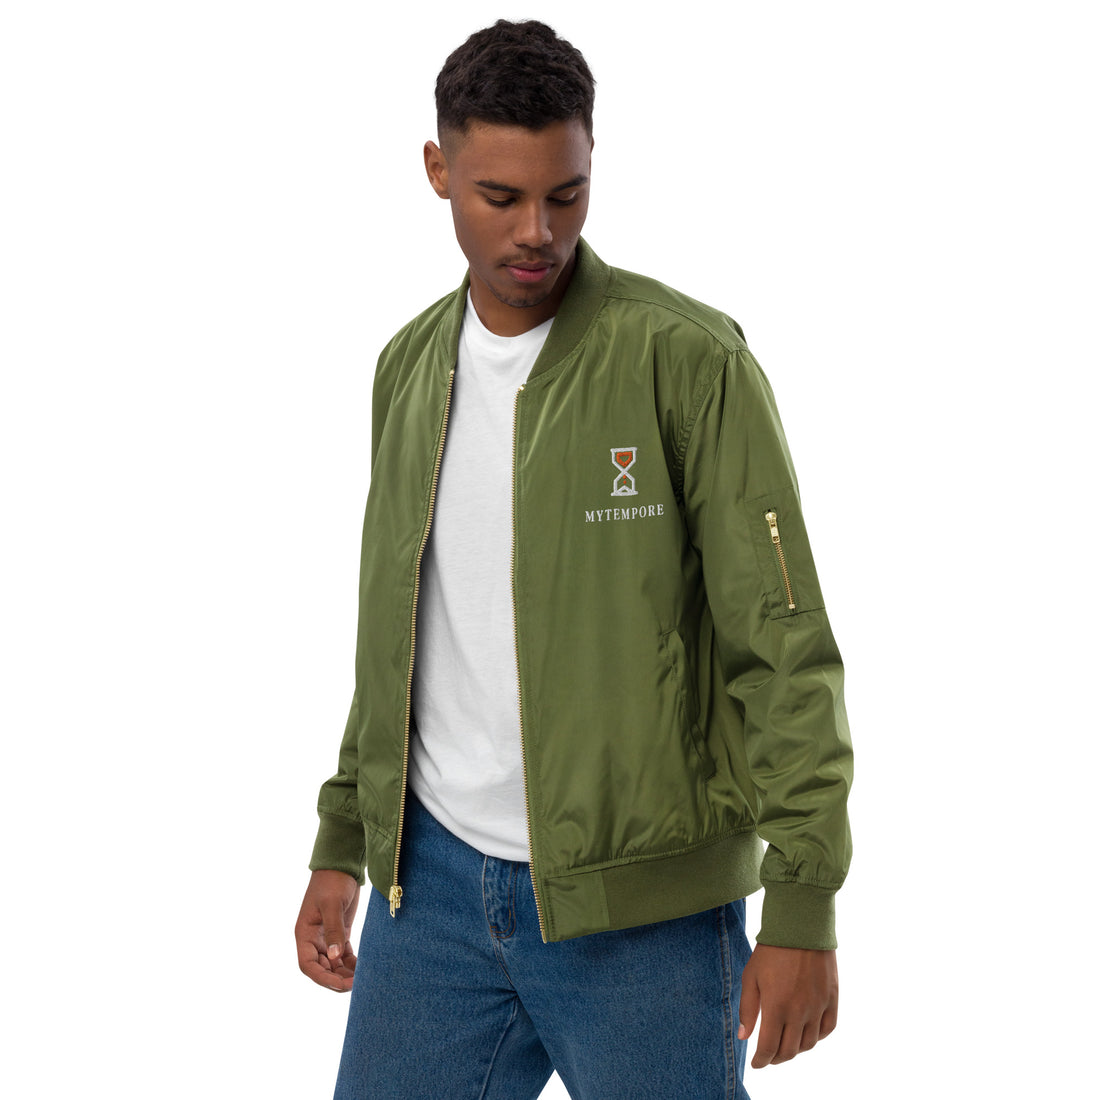 MYTEMPORE Premium recycled bomber jacket